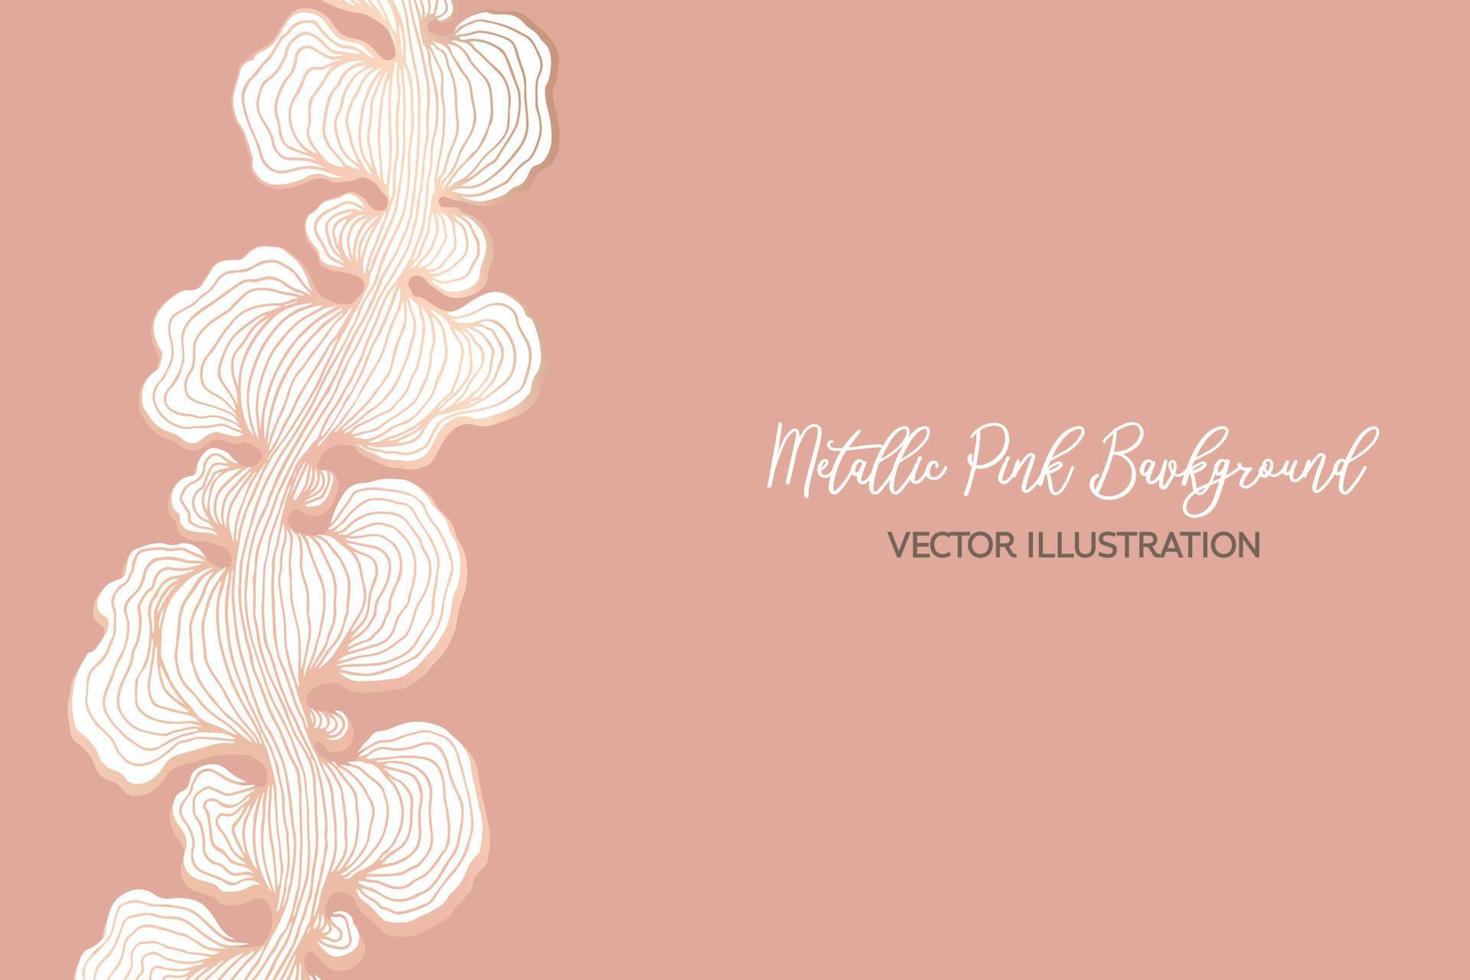 ouro metálico rosa etéreo swirly abstrato, linhas orgânicas em fundo rosa vintage. vetor